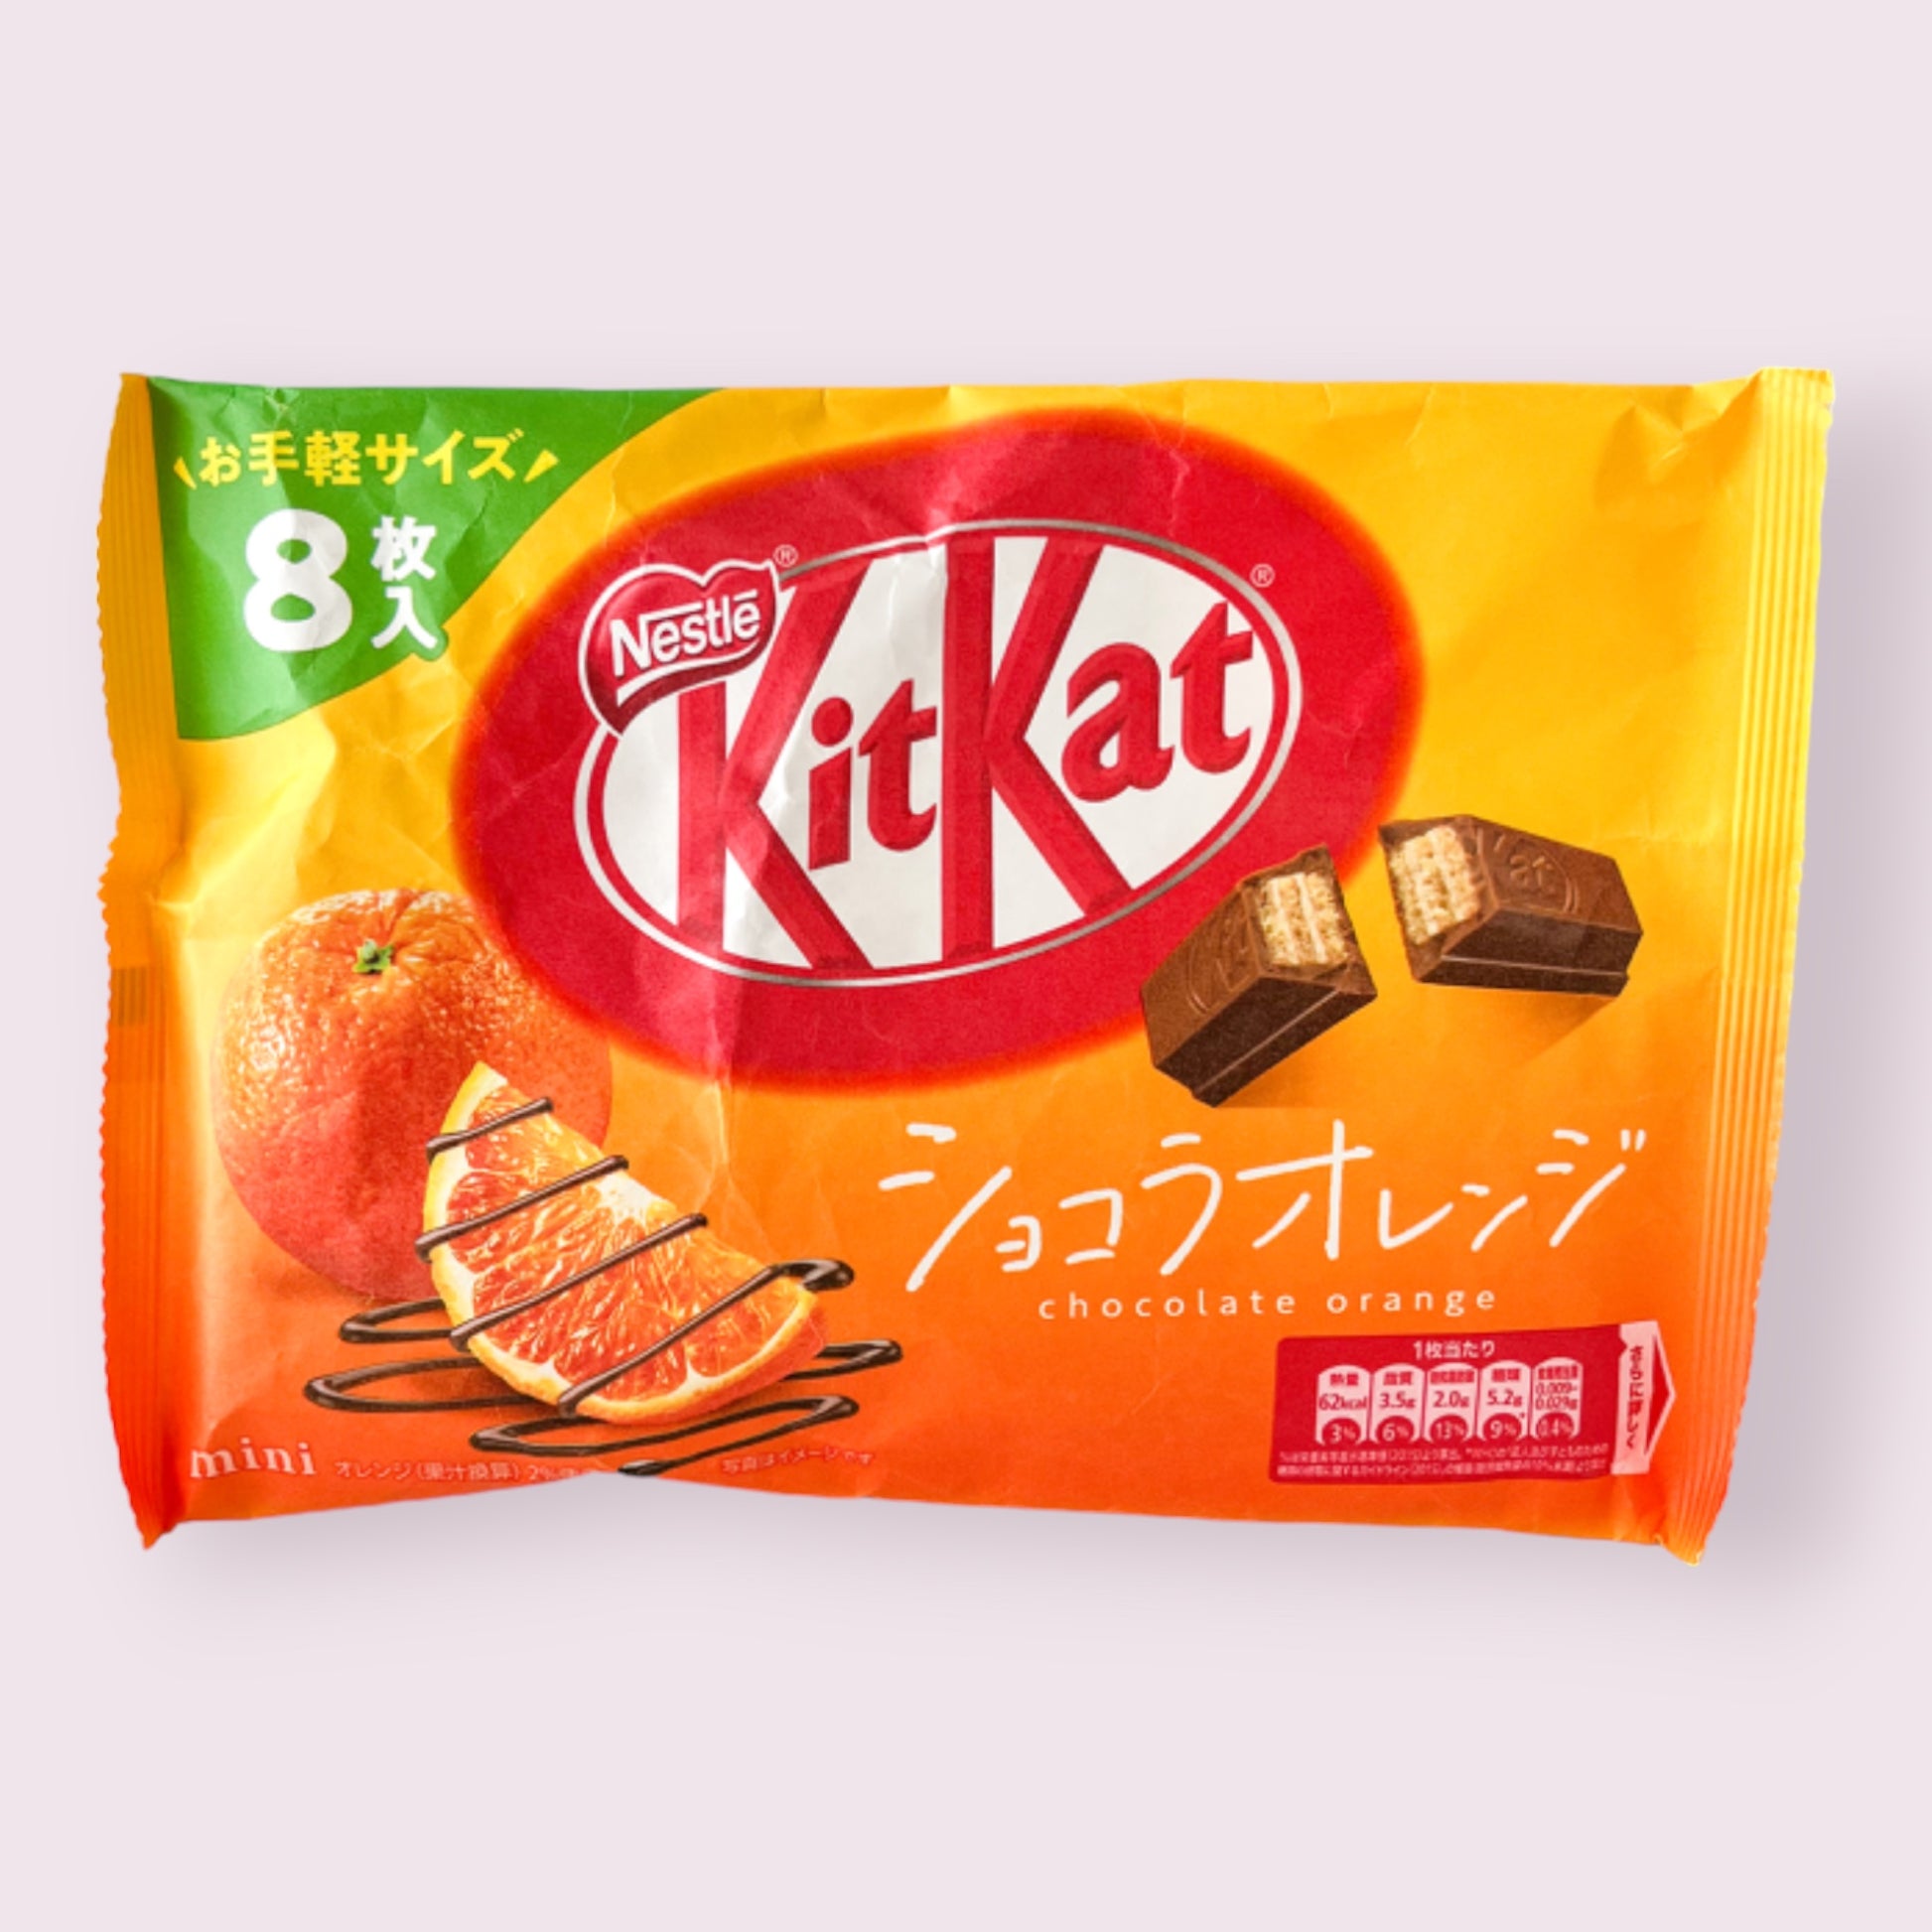 Kit Kat Mini Chocolate Orange Packs  Pixie Candy Shoppe   